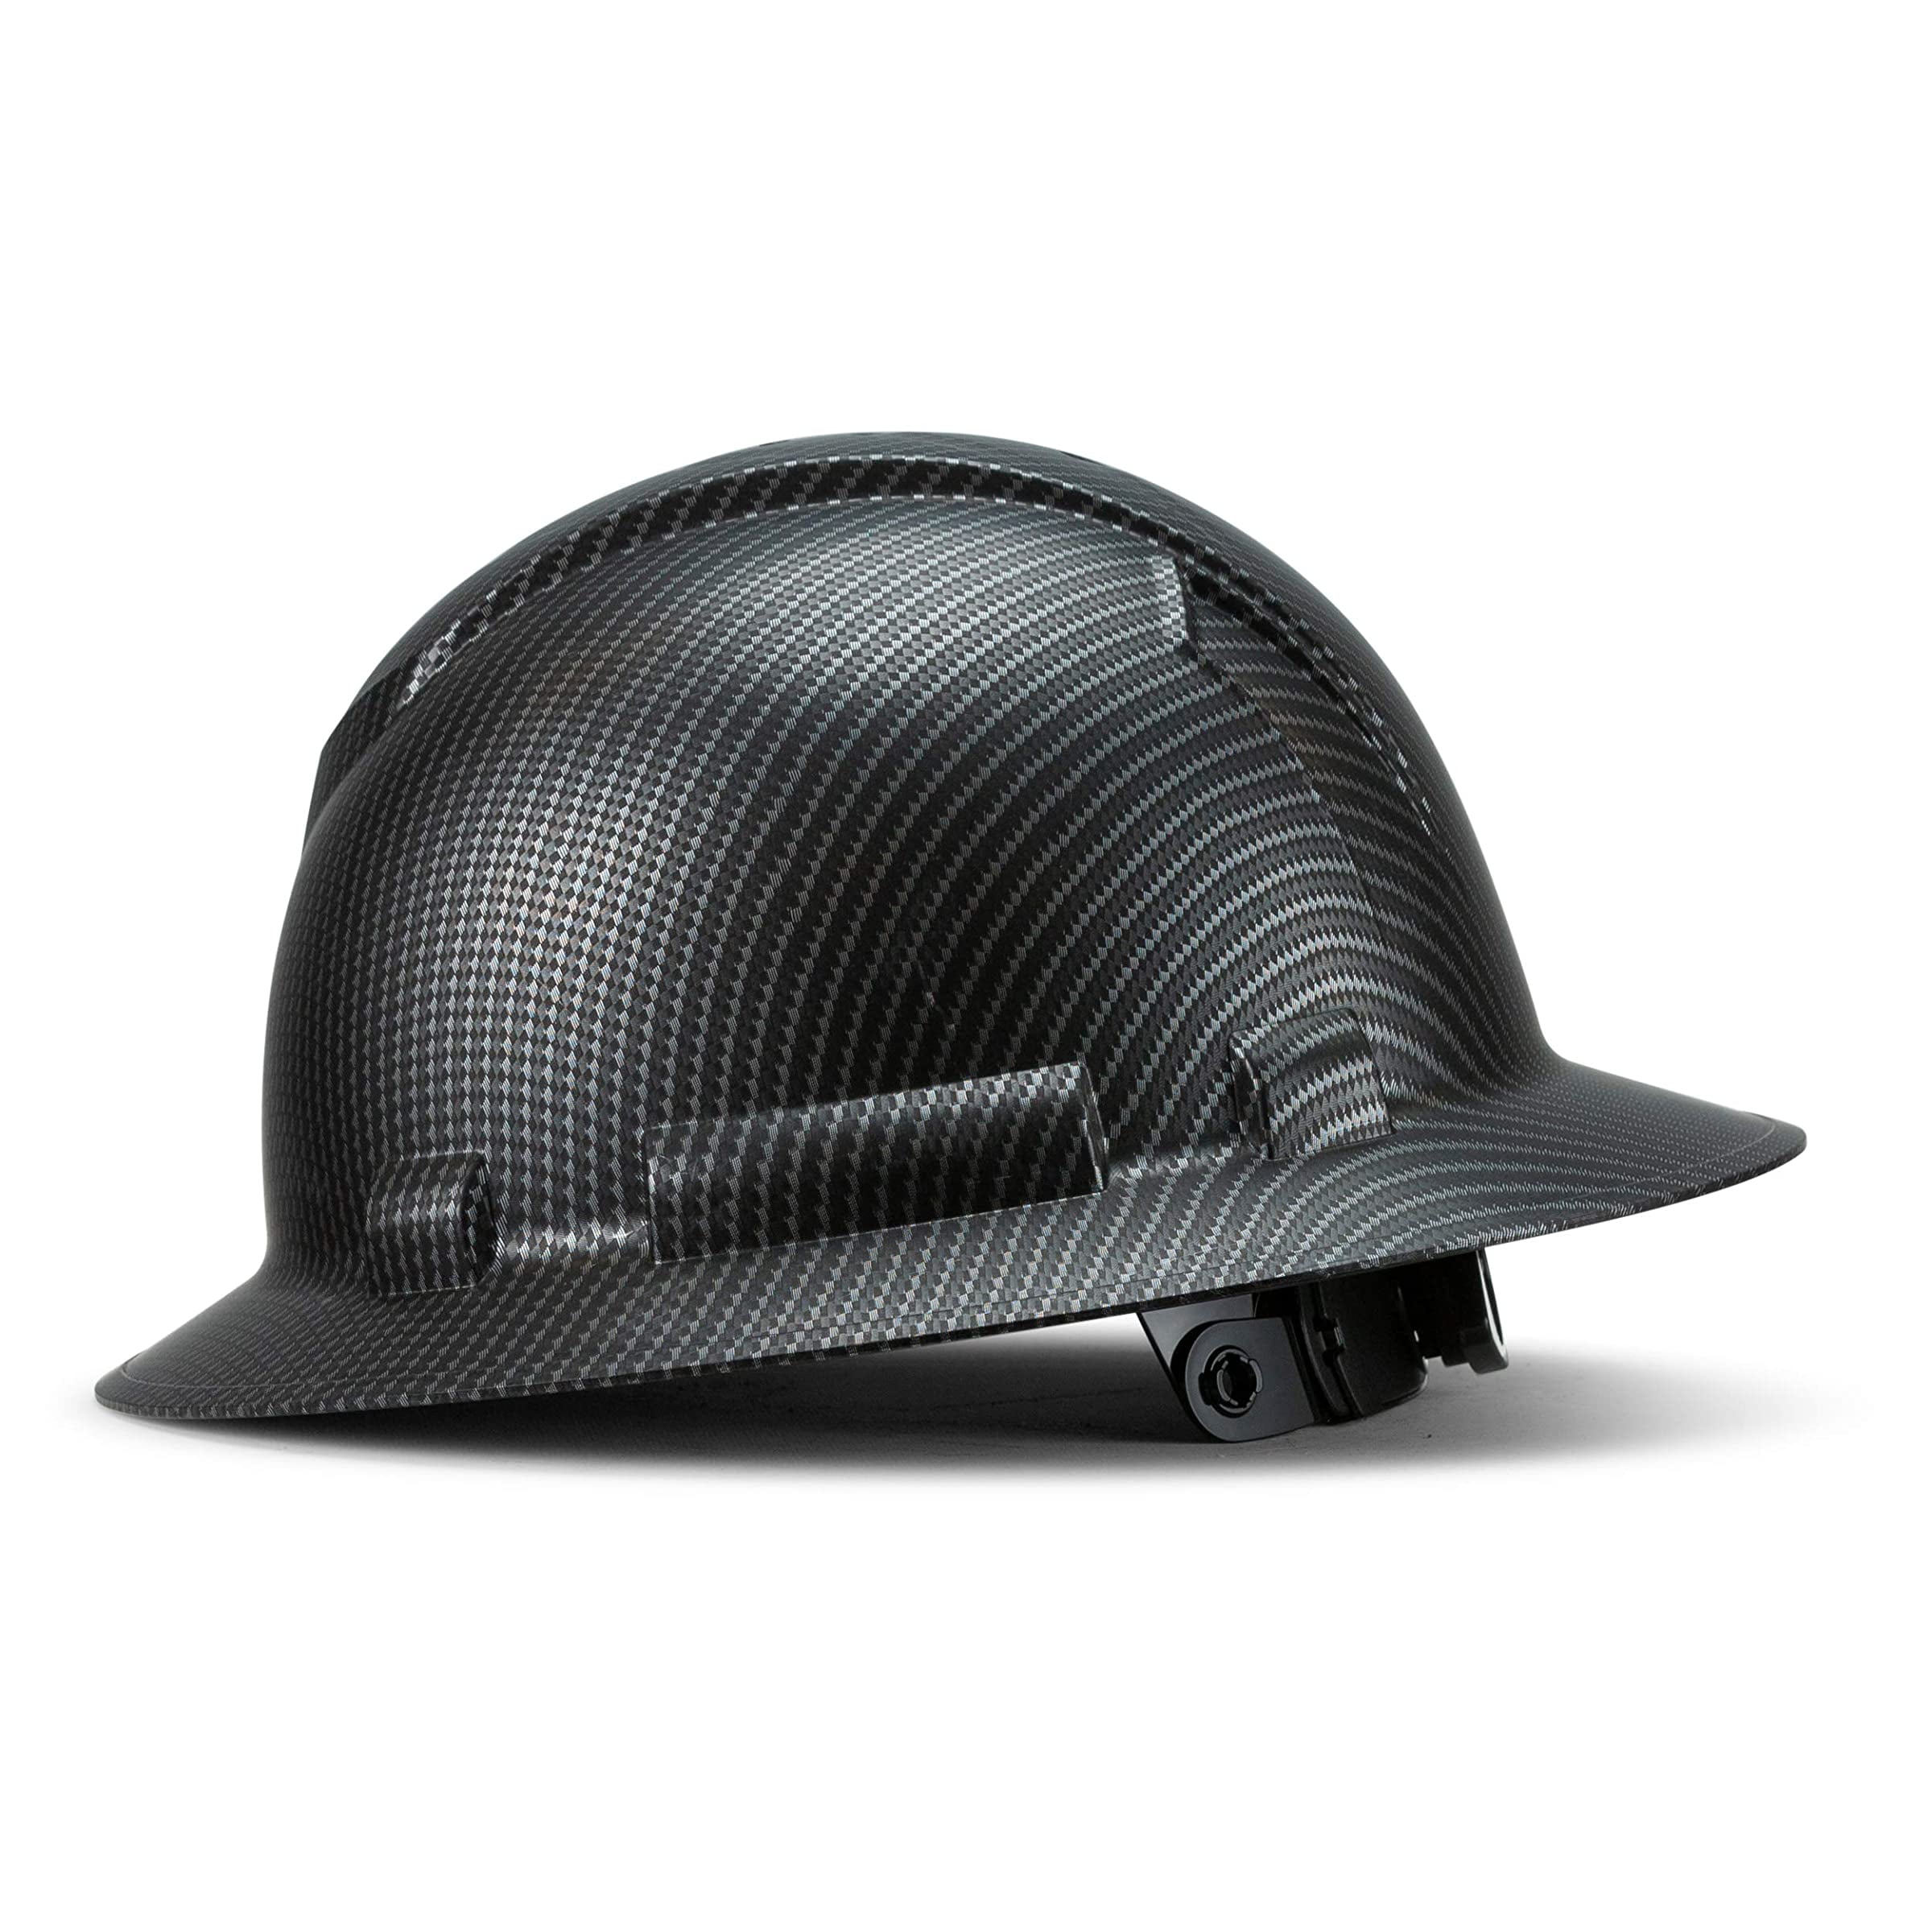 Classic Navy Bump Cap Safety Work Hard Hat Vented Baseball Mens Cap